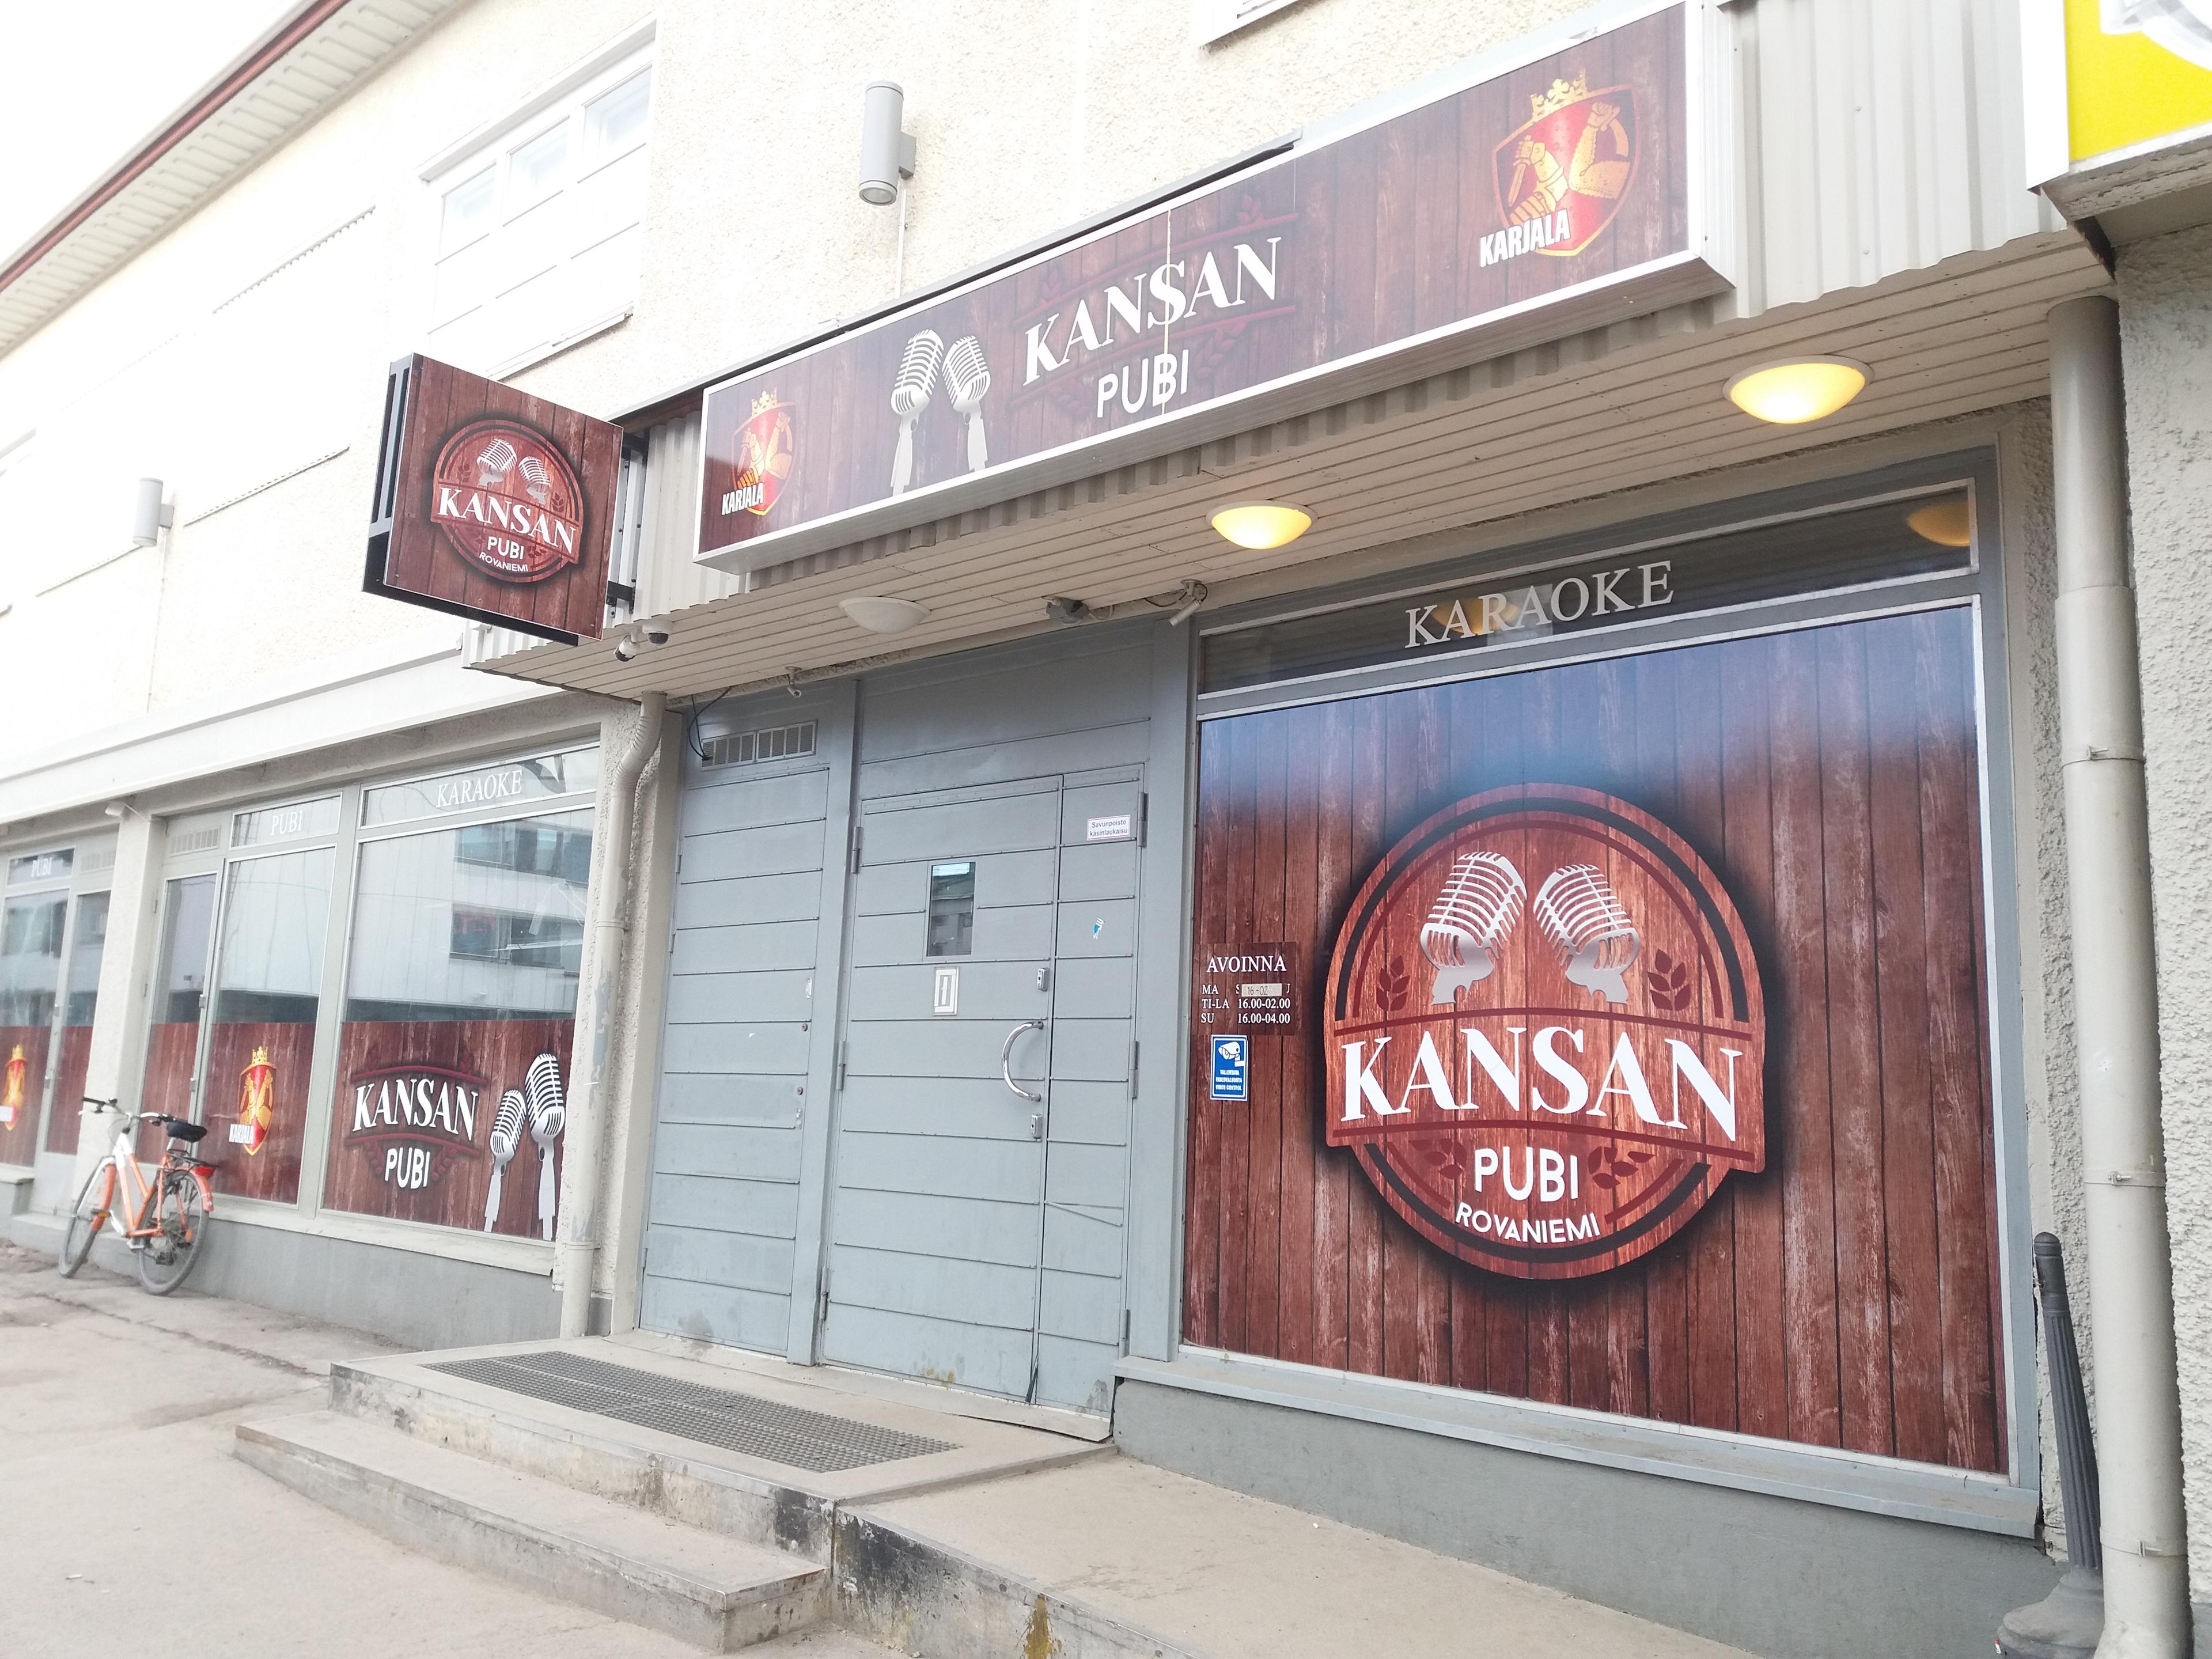 Cover image of this place Kansan Karaoke Pub